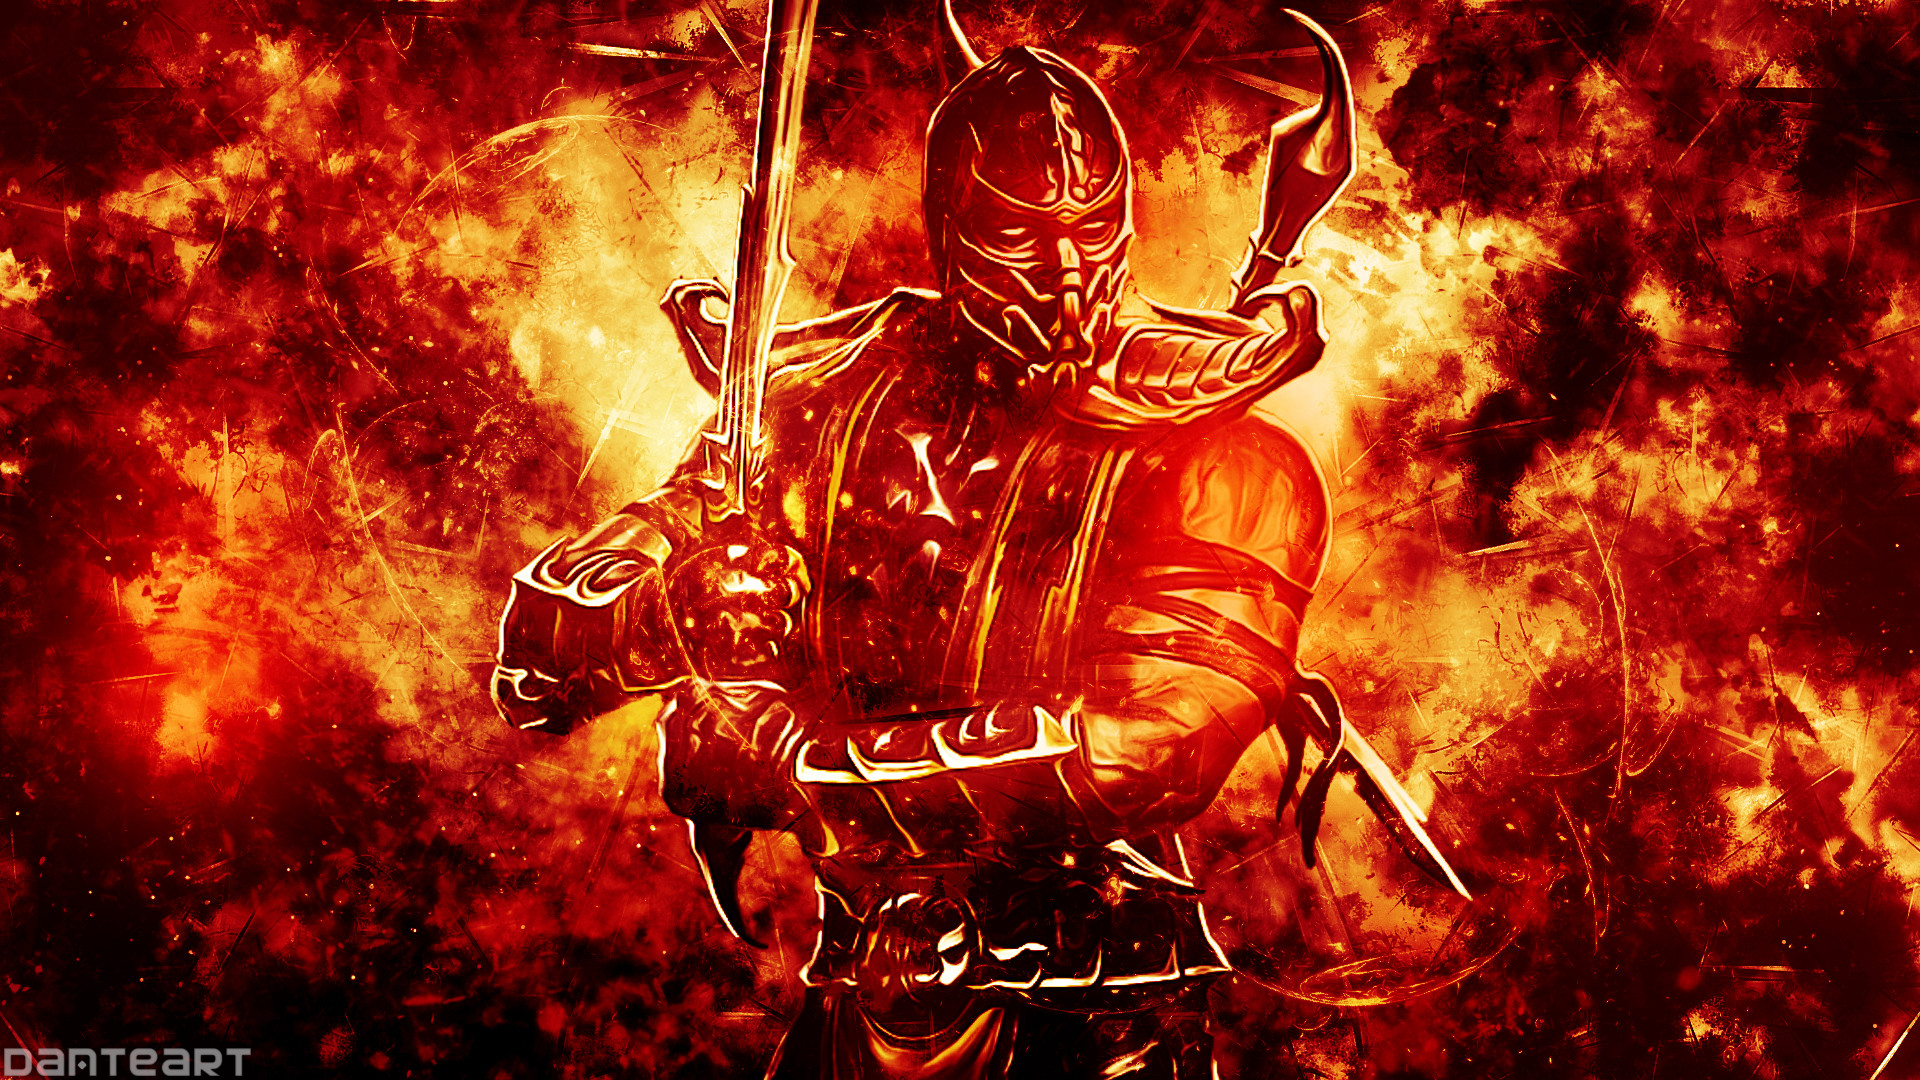 1920x1080 Mortal Kombat Scorpion Wallpaper by DanteArtWallpapers Mortal Kombat  Scorpion Wallpaper by DanteArtWallpapers